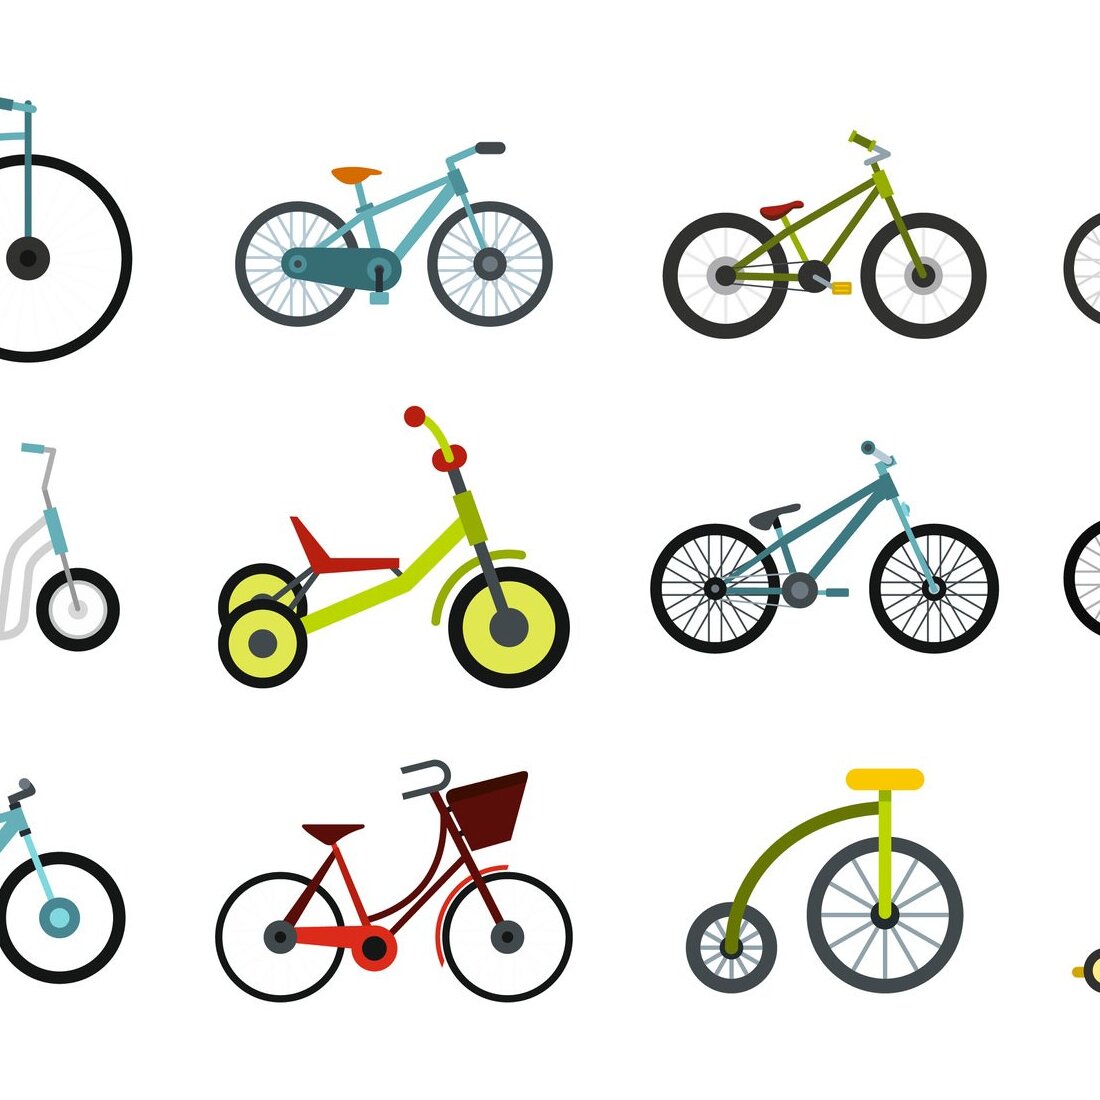 Bike icon set, flat style.